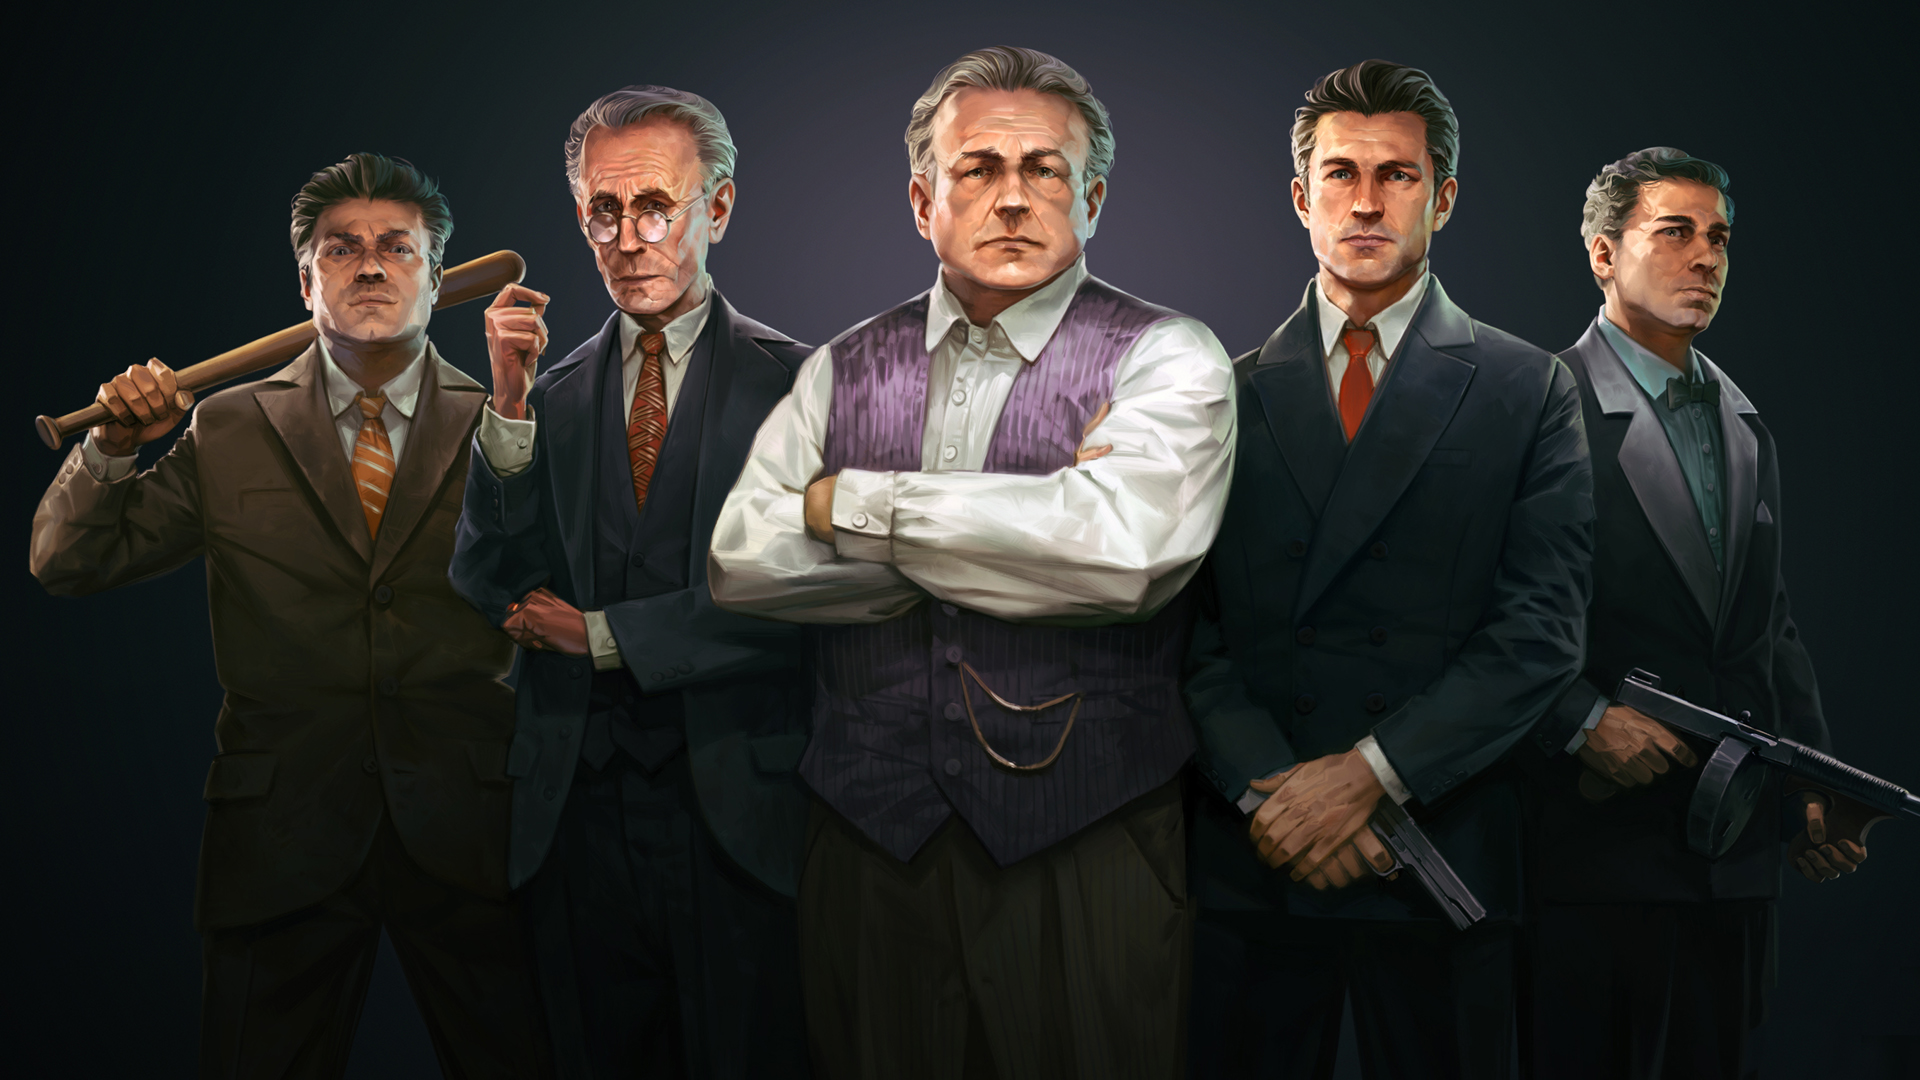 mafia city game